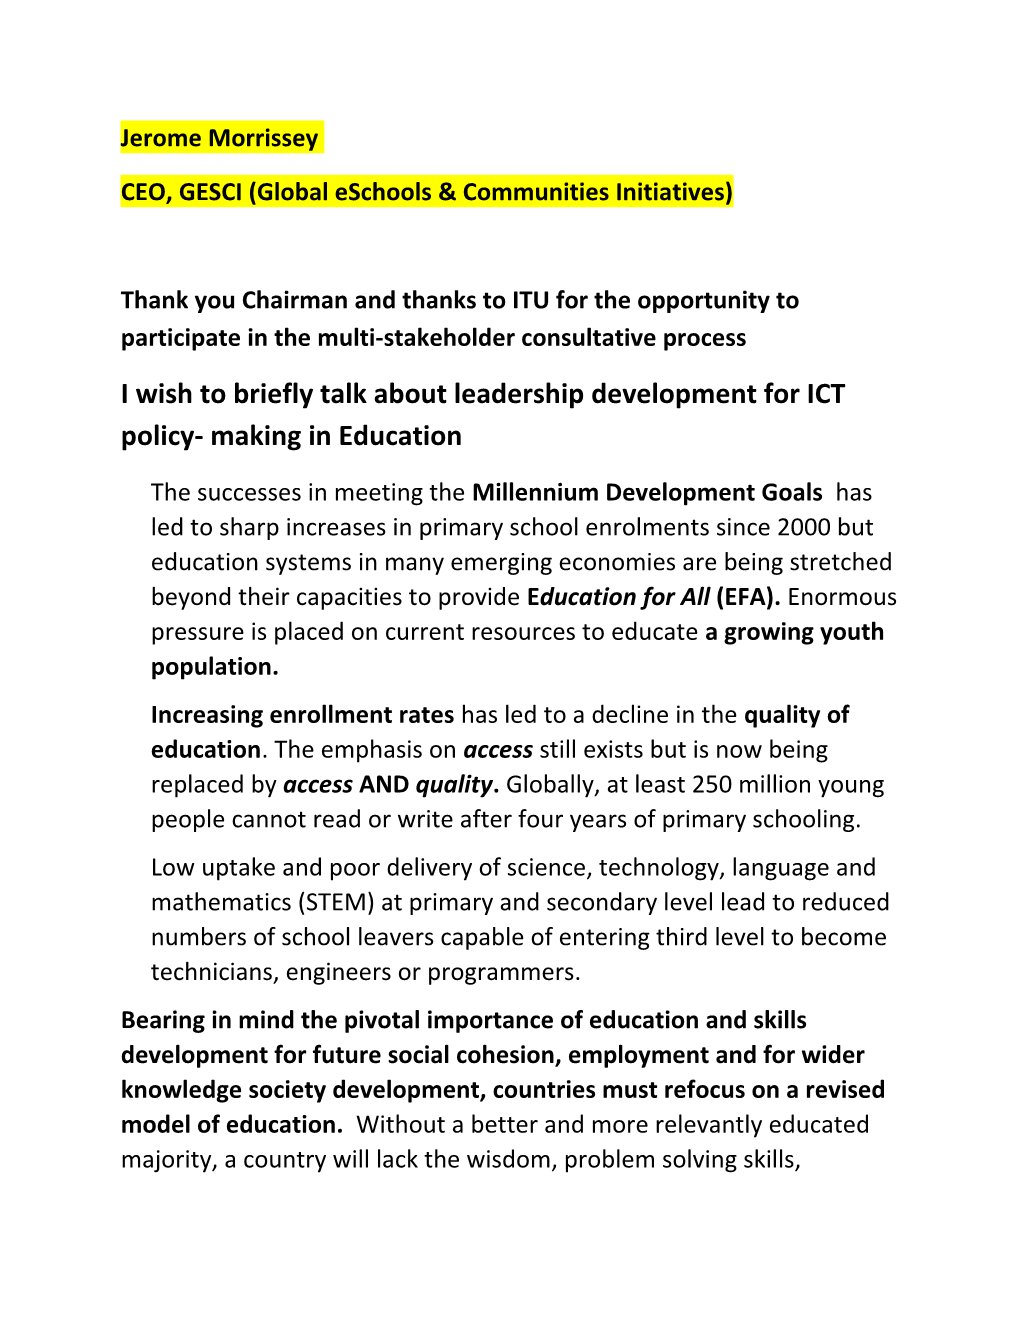 CEO, GESCI (Global Eschools & Communities Initiatives)